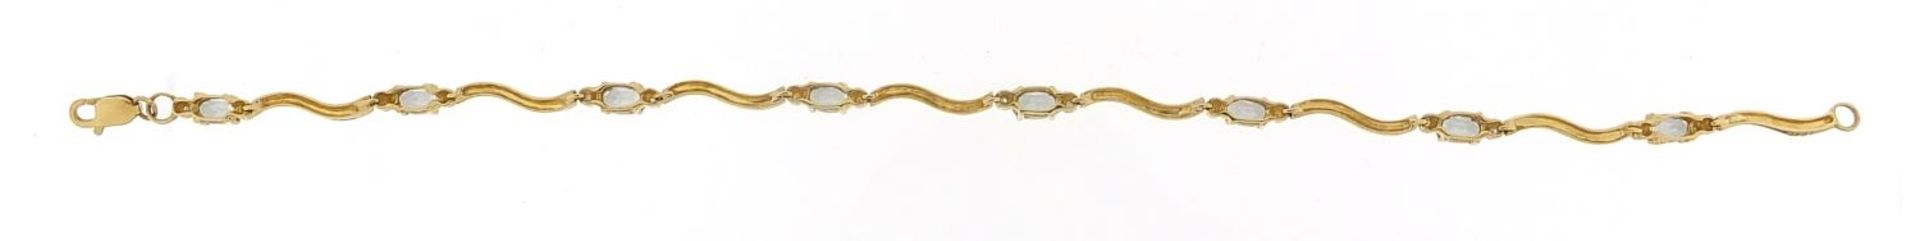 9ct gold mystic topaz and diamond bracelet, 18cm in length, 4.2g - Image 3 of 4